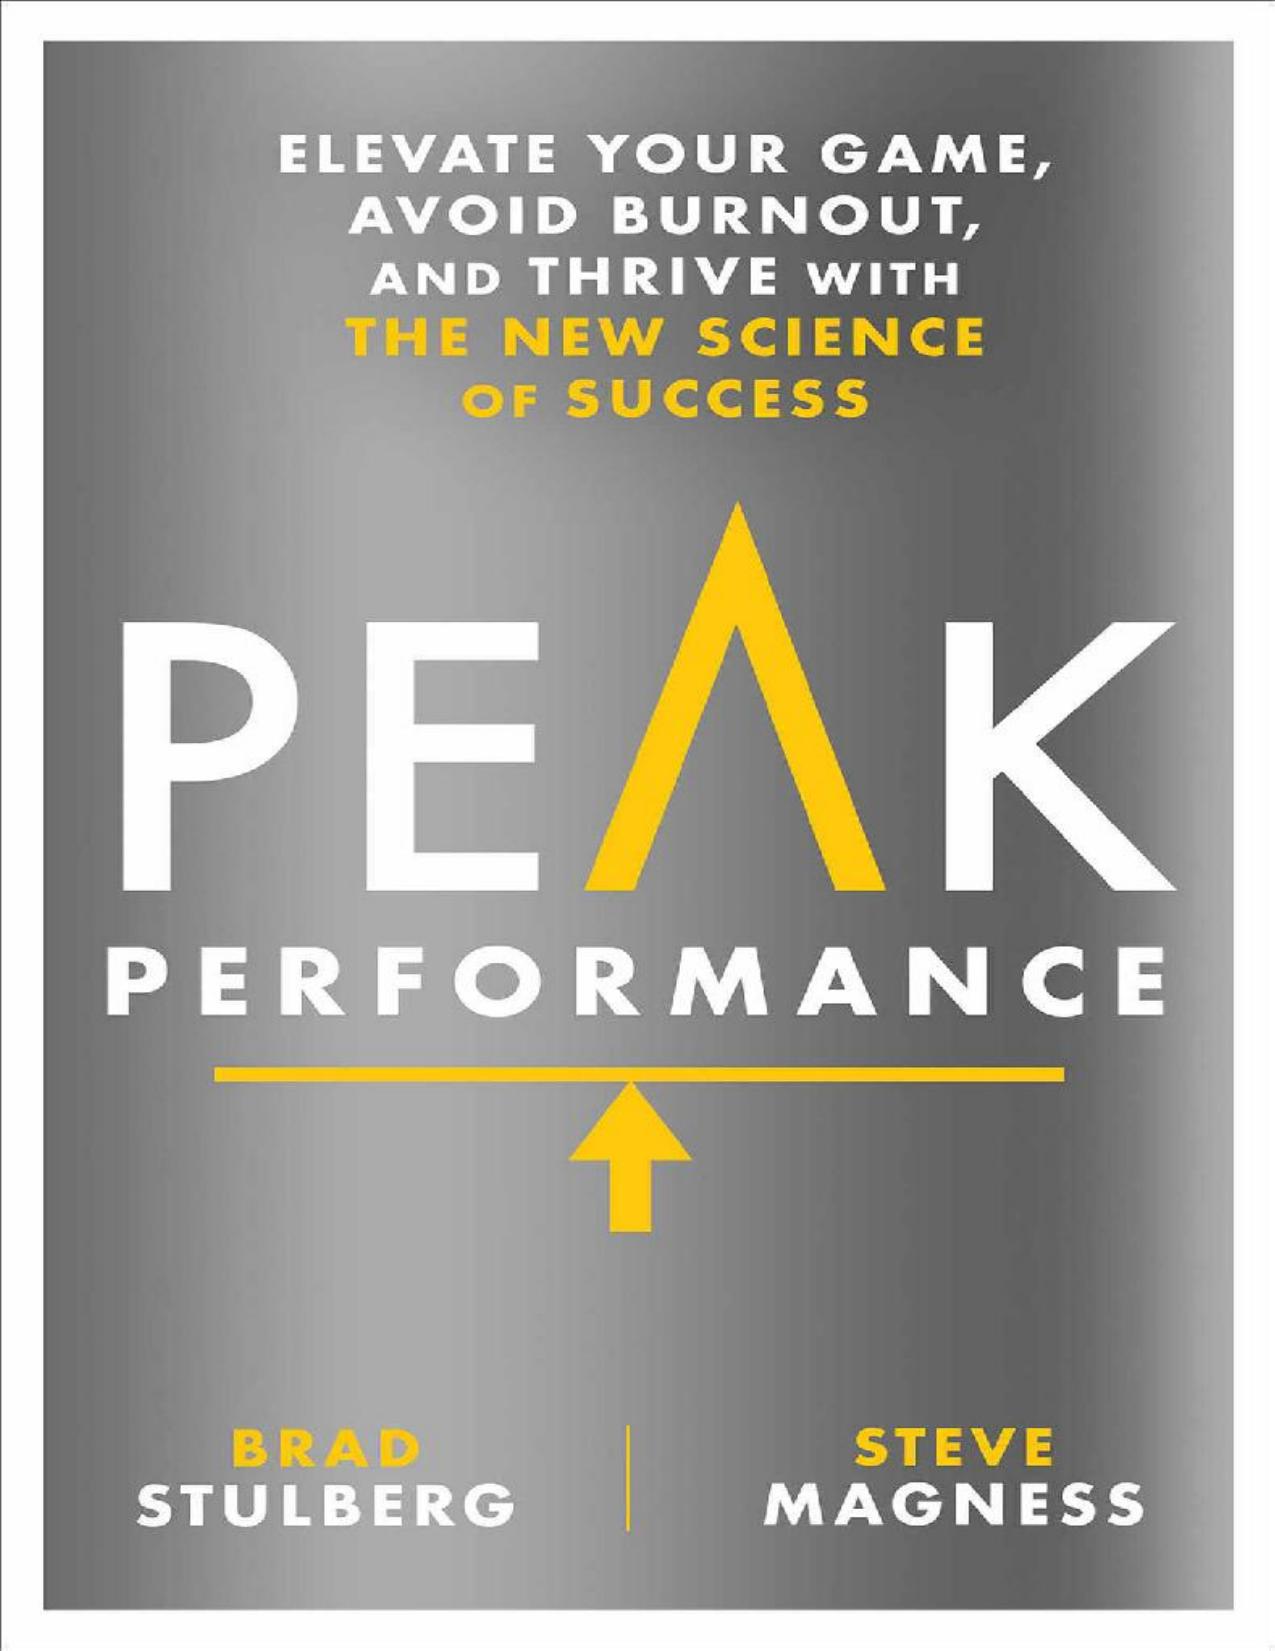 Peak Performance by Brad Stulberg PDF, EPUB Free Download